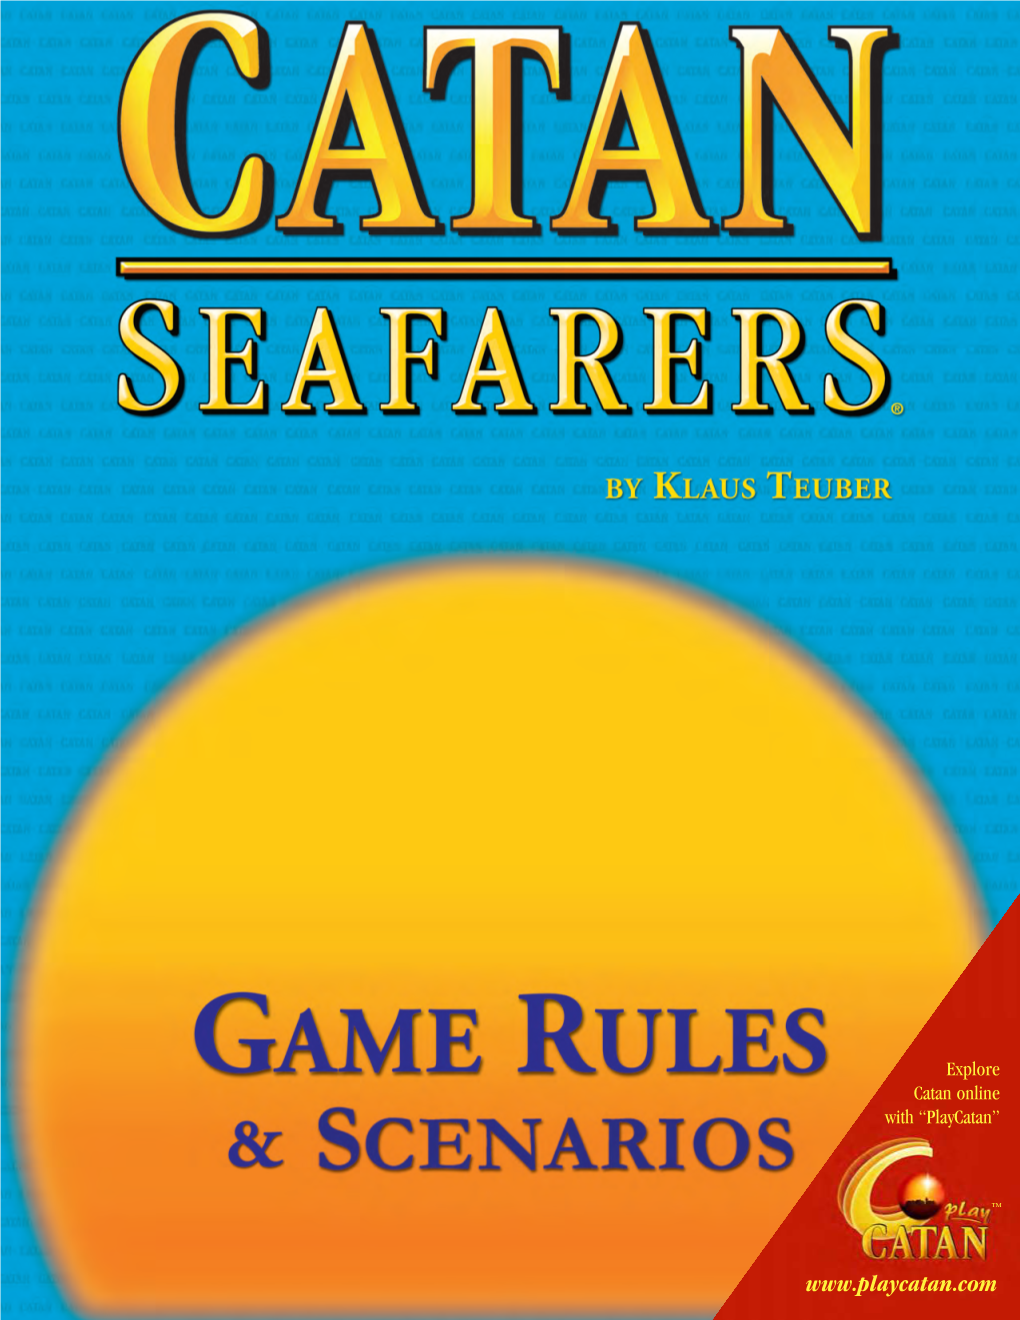 Catan: Seafarers Rulebook